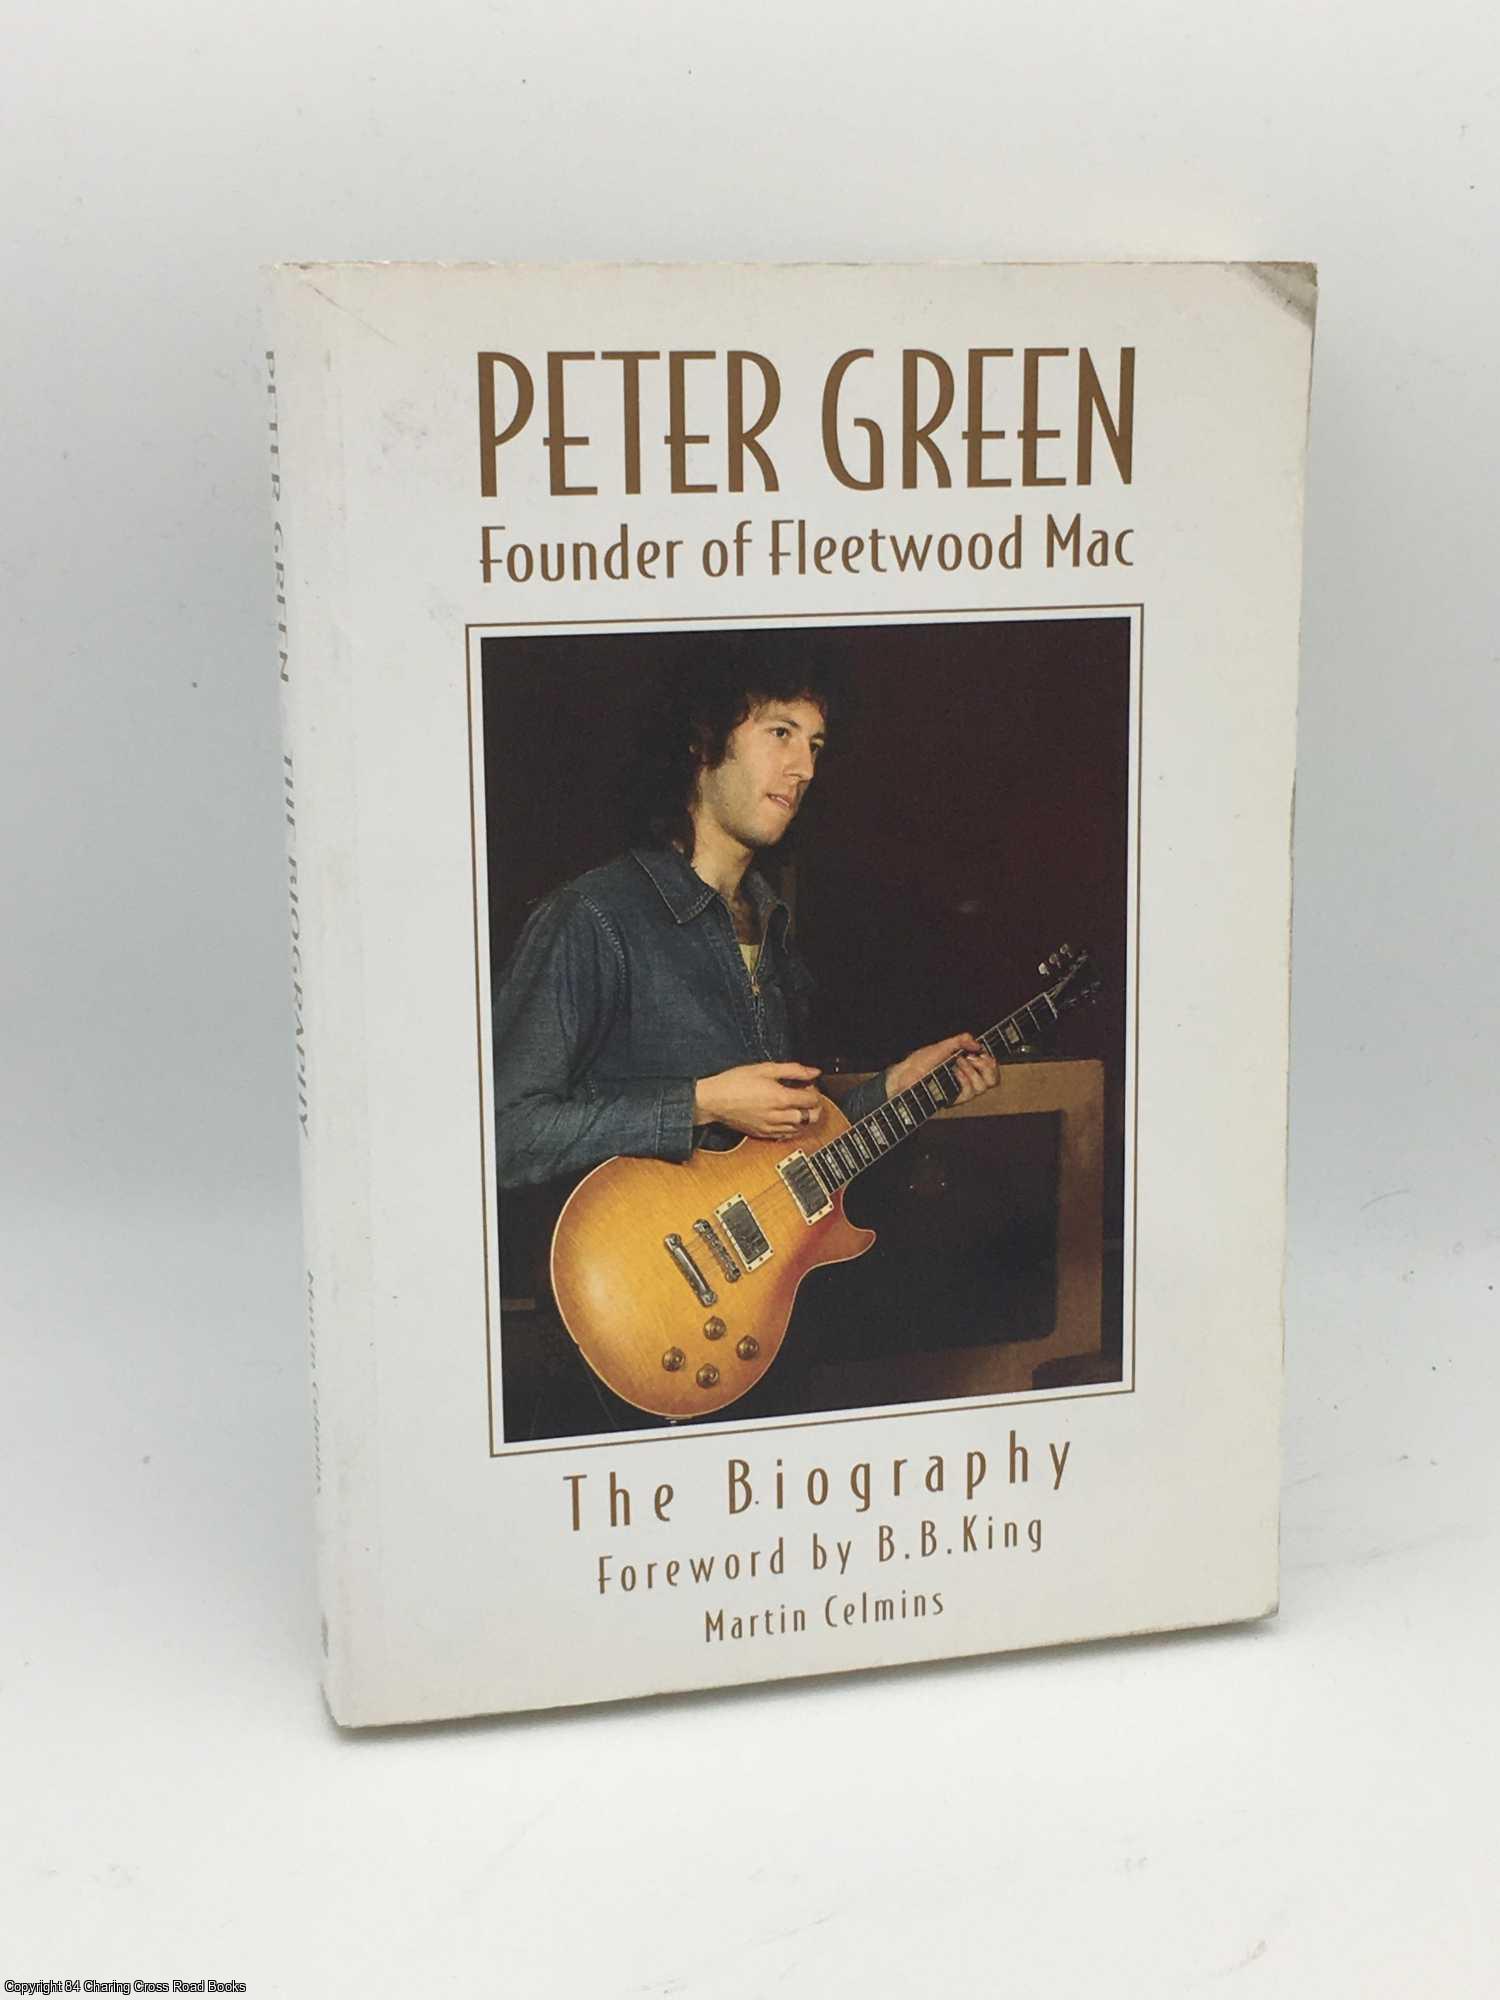 Celmins, Martin - Peter Green: Founder of Fleetwood Mac - The Biography